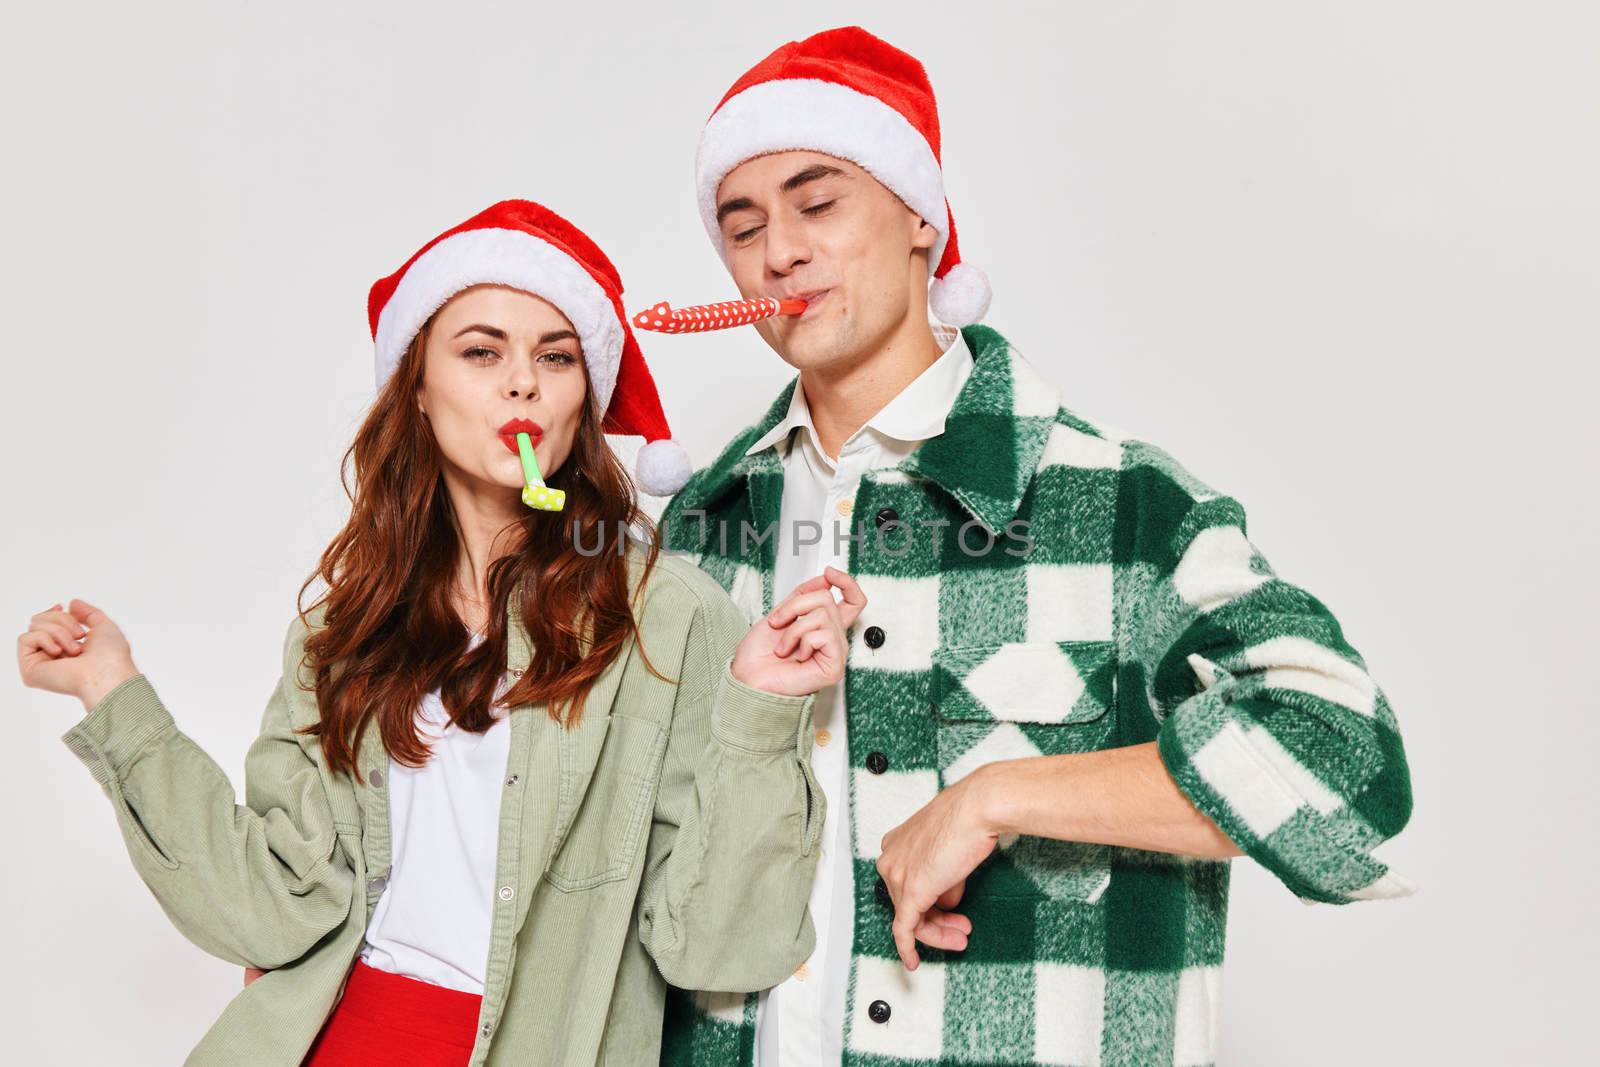 Man and woman festive mood fun friendship fashion lifestyle. High quality photo